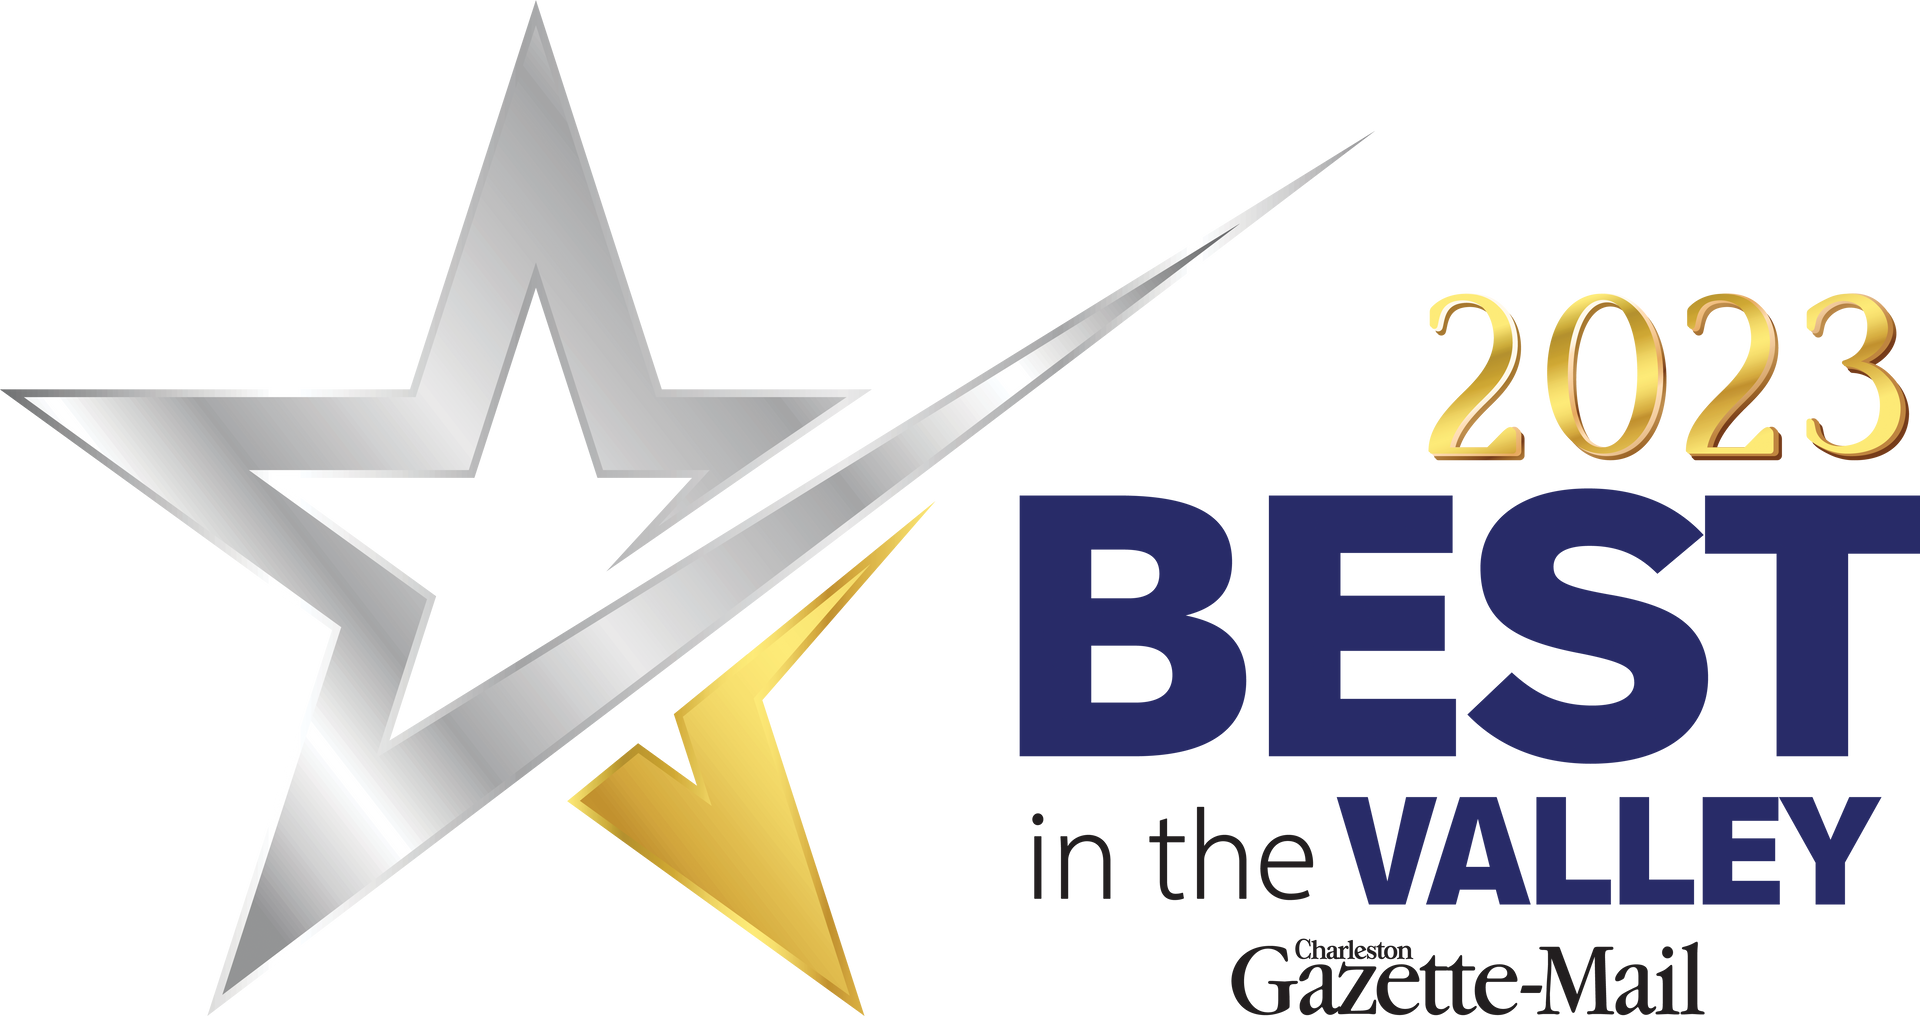 2023 best in the valley logo